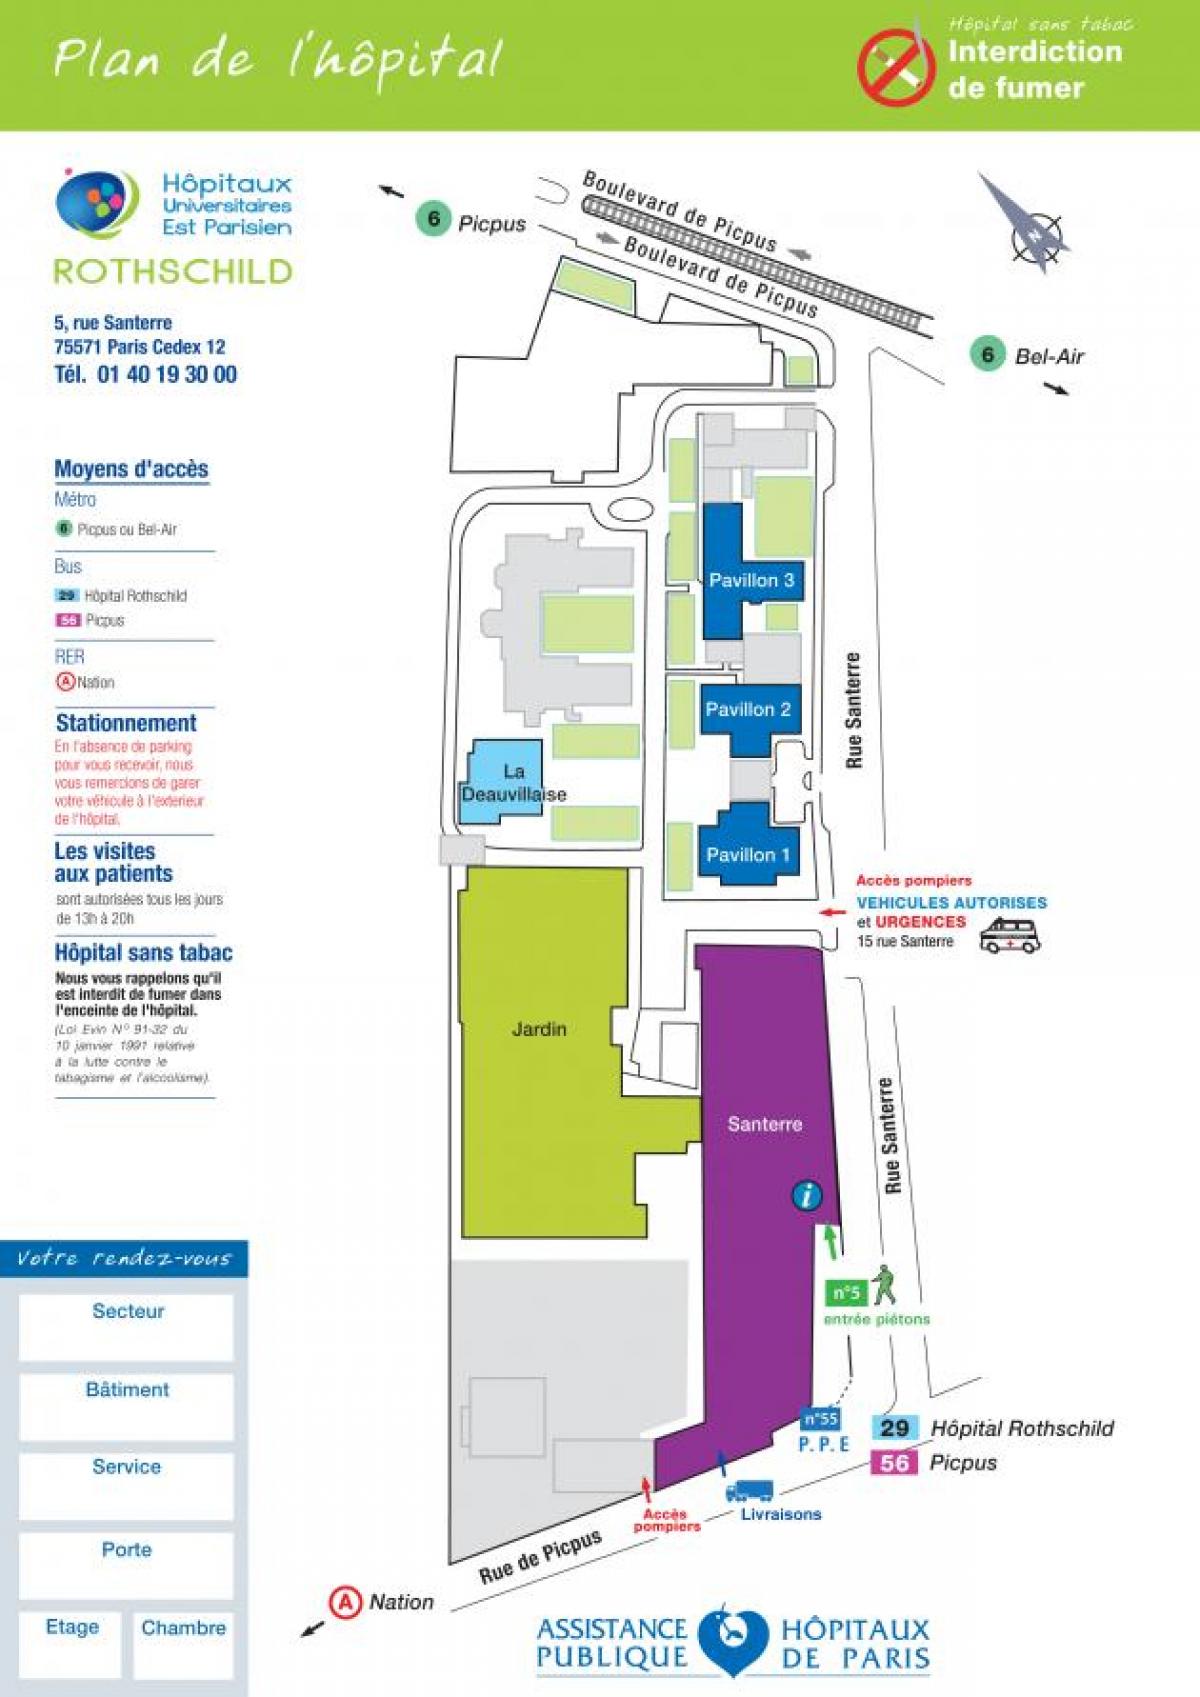 Peta Rothschild hospital